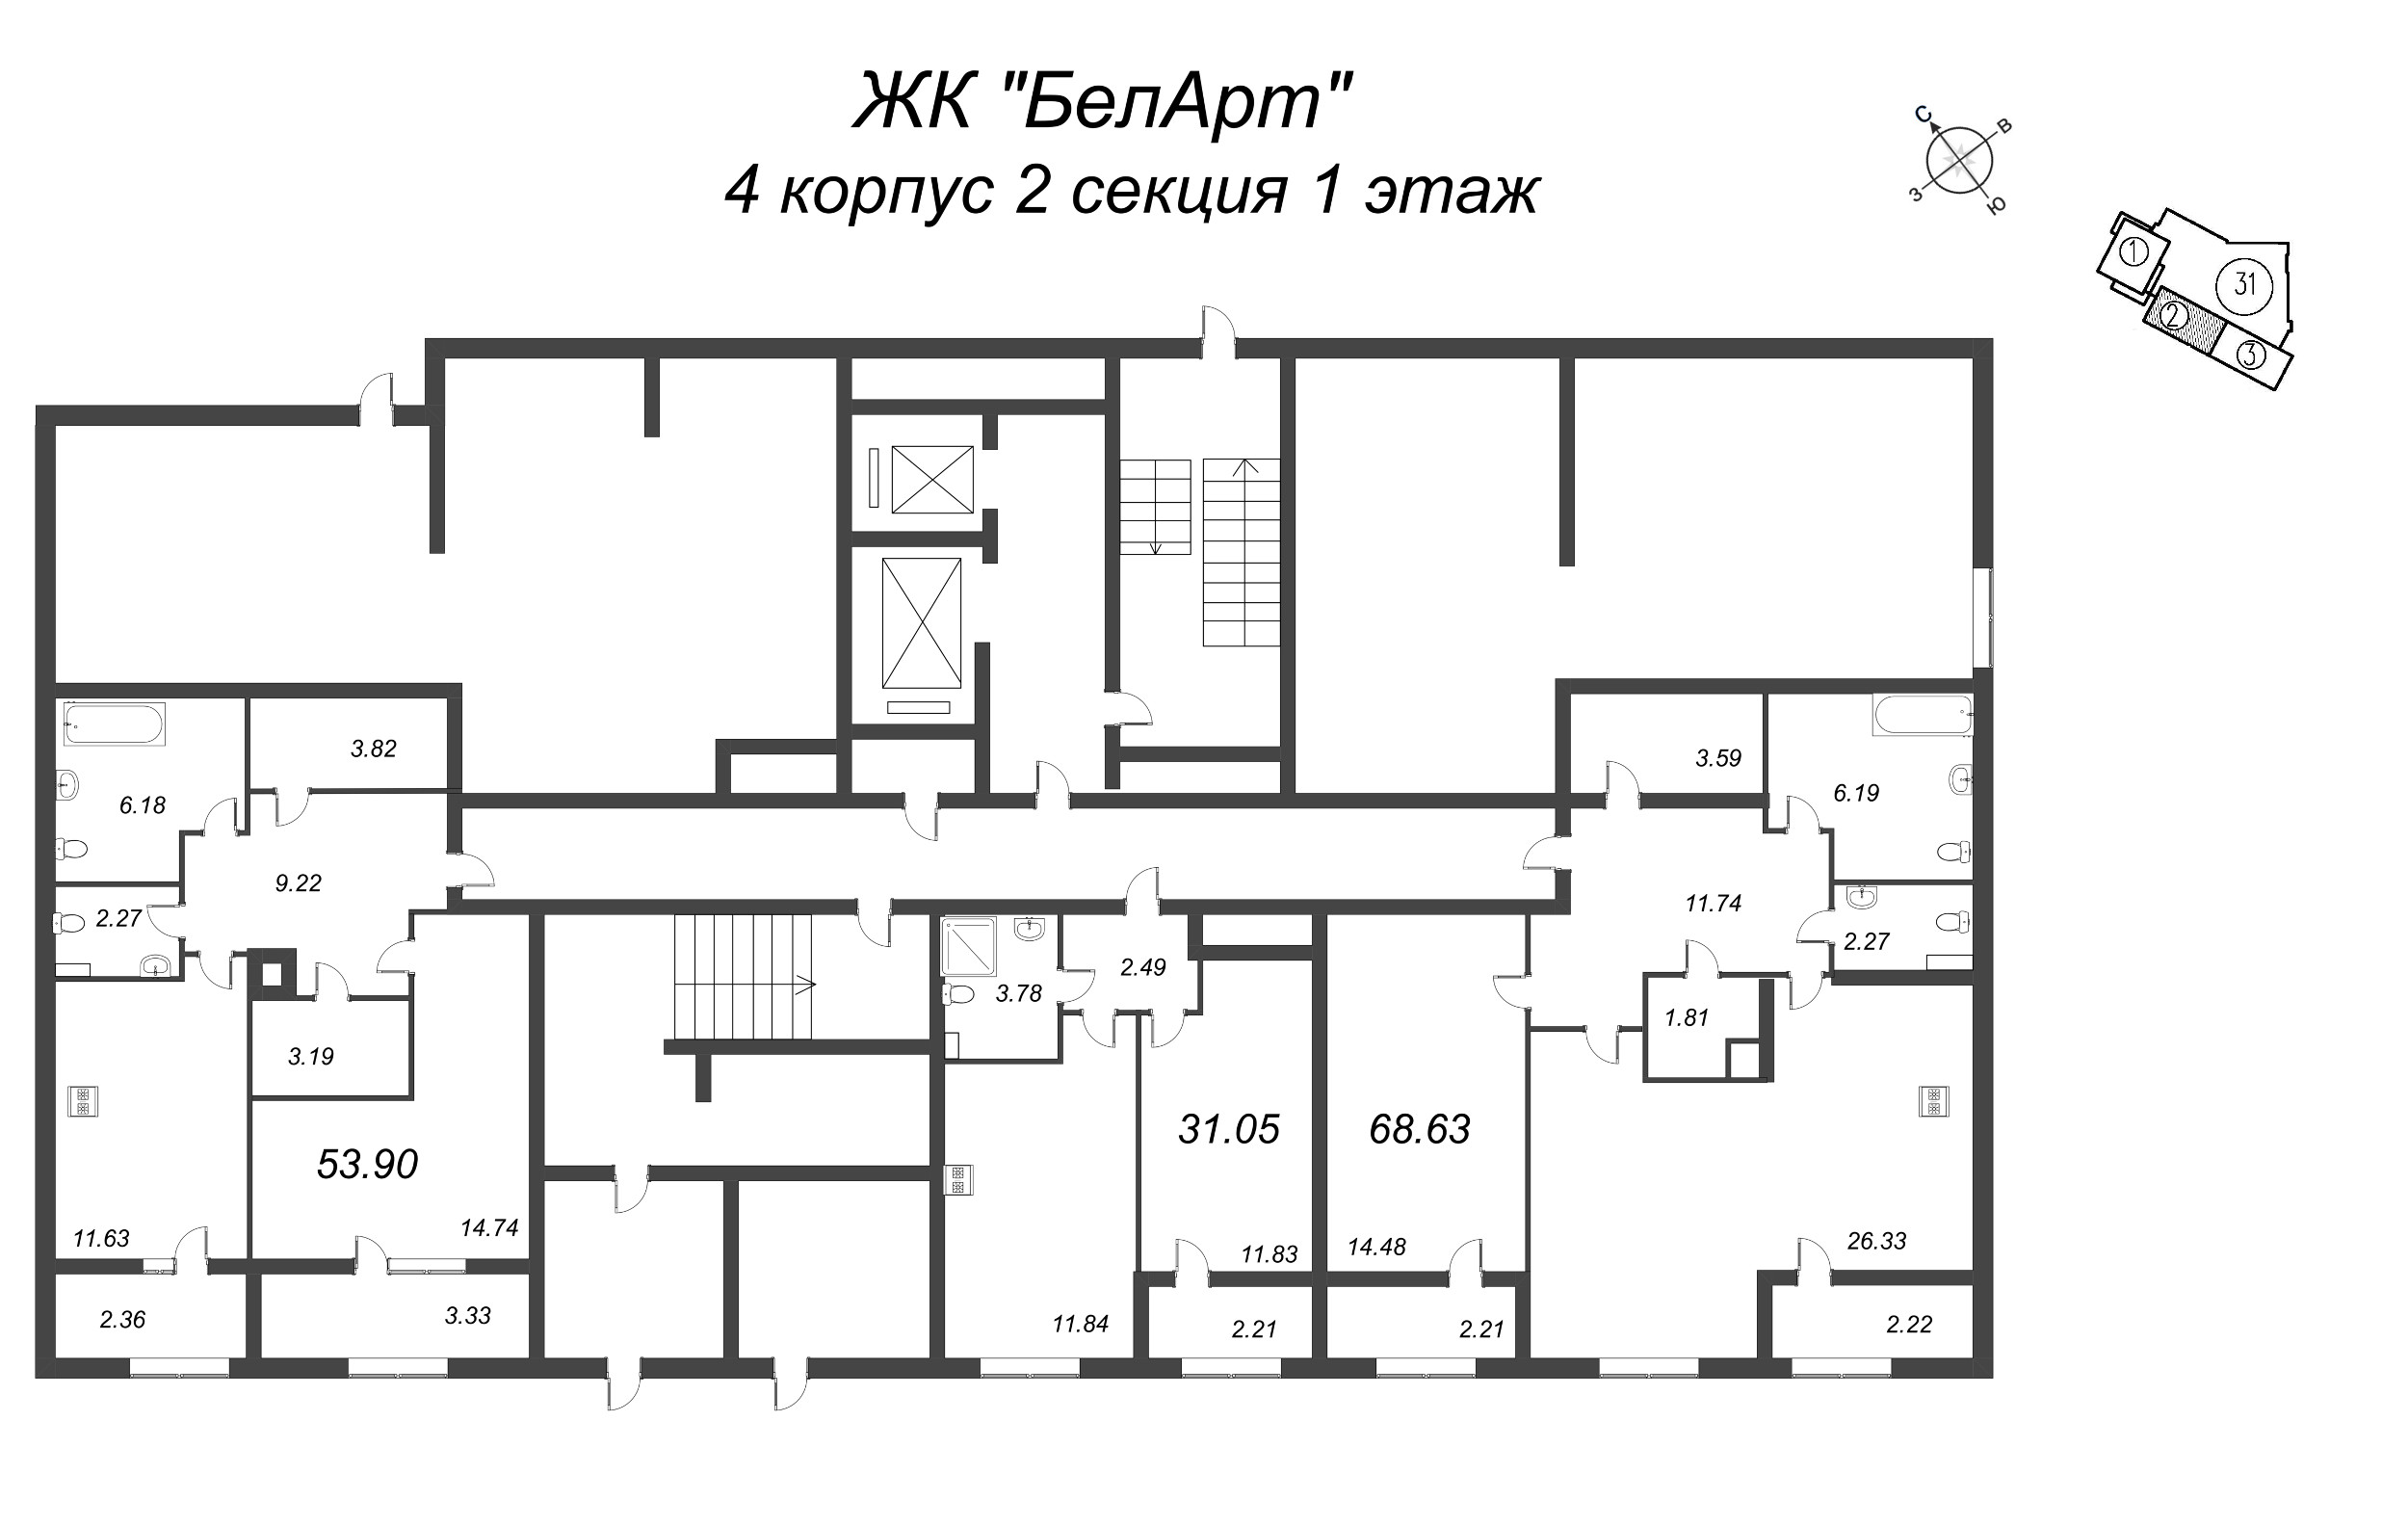 2-комнатная (Евро) квартира, 68.63 м² в ЖК "БелАрт" - планировка этажа